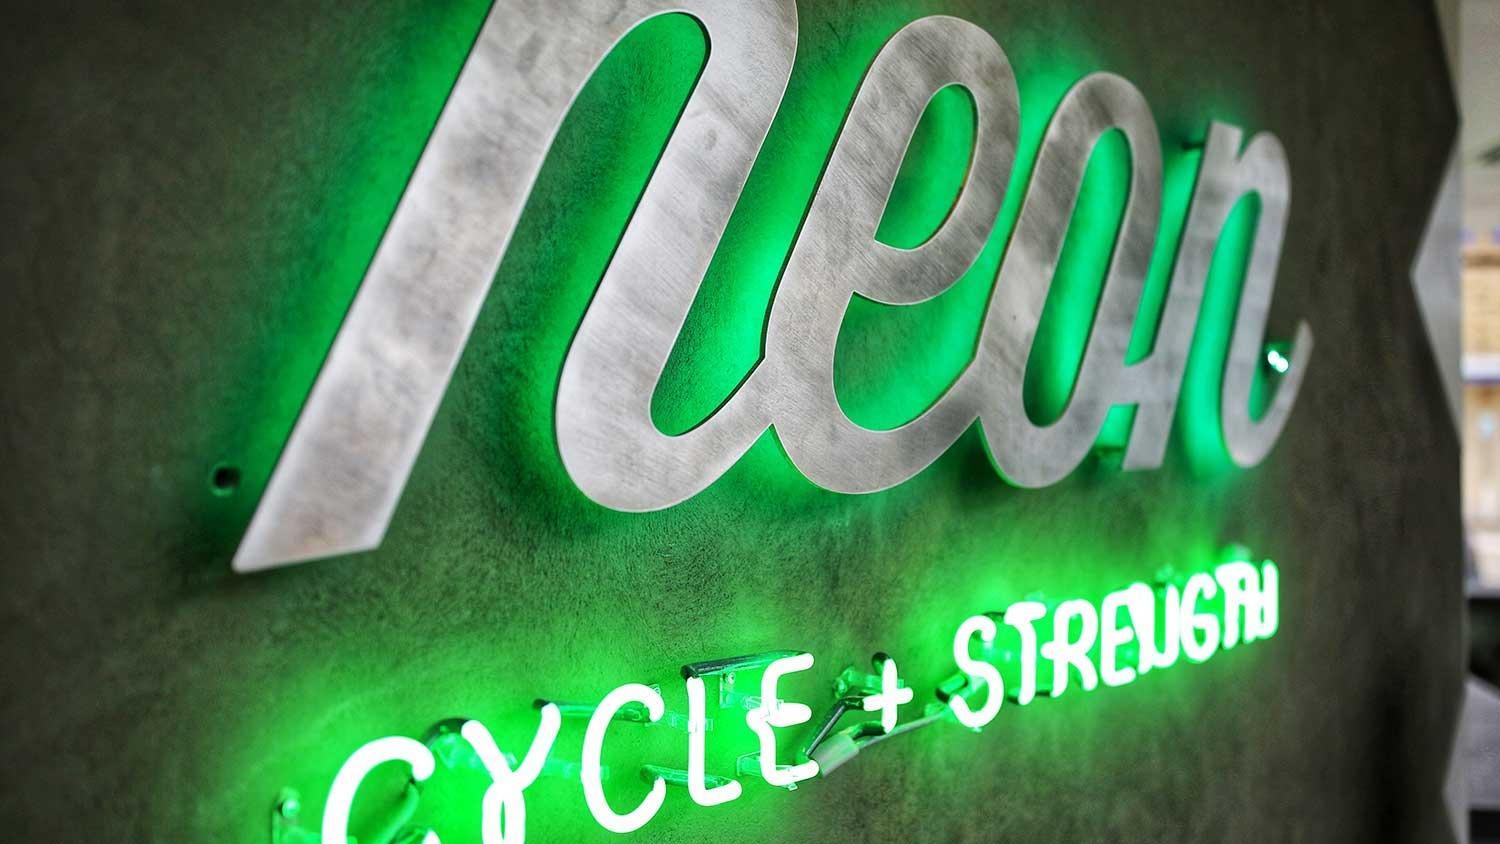 Neon Cycle + Strength Photo